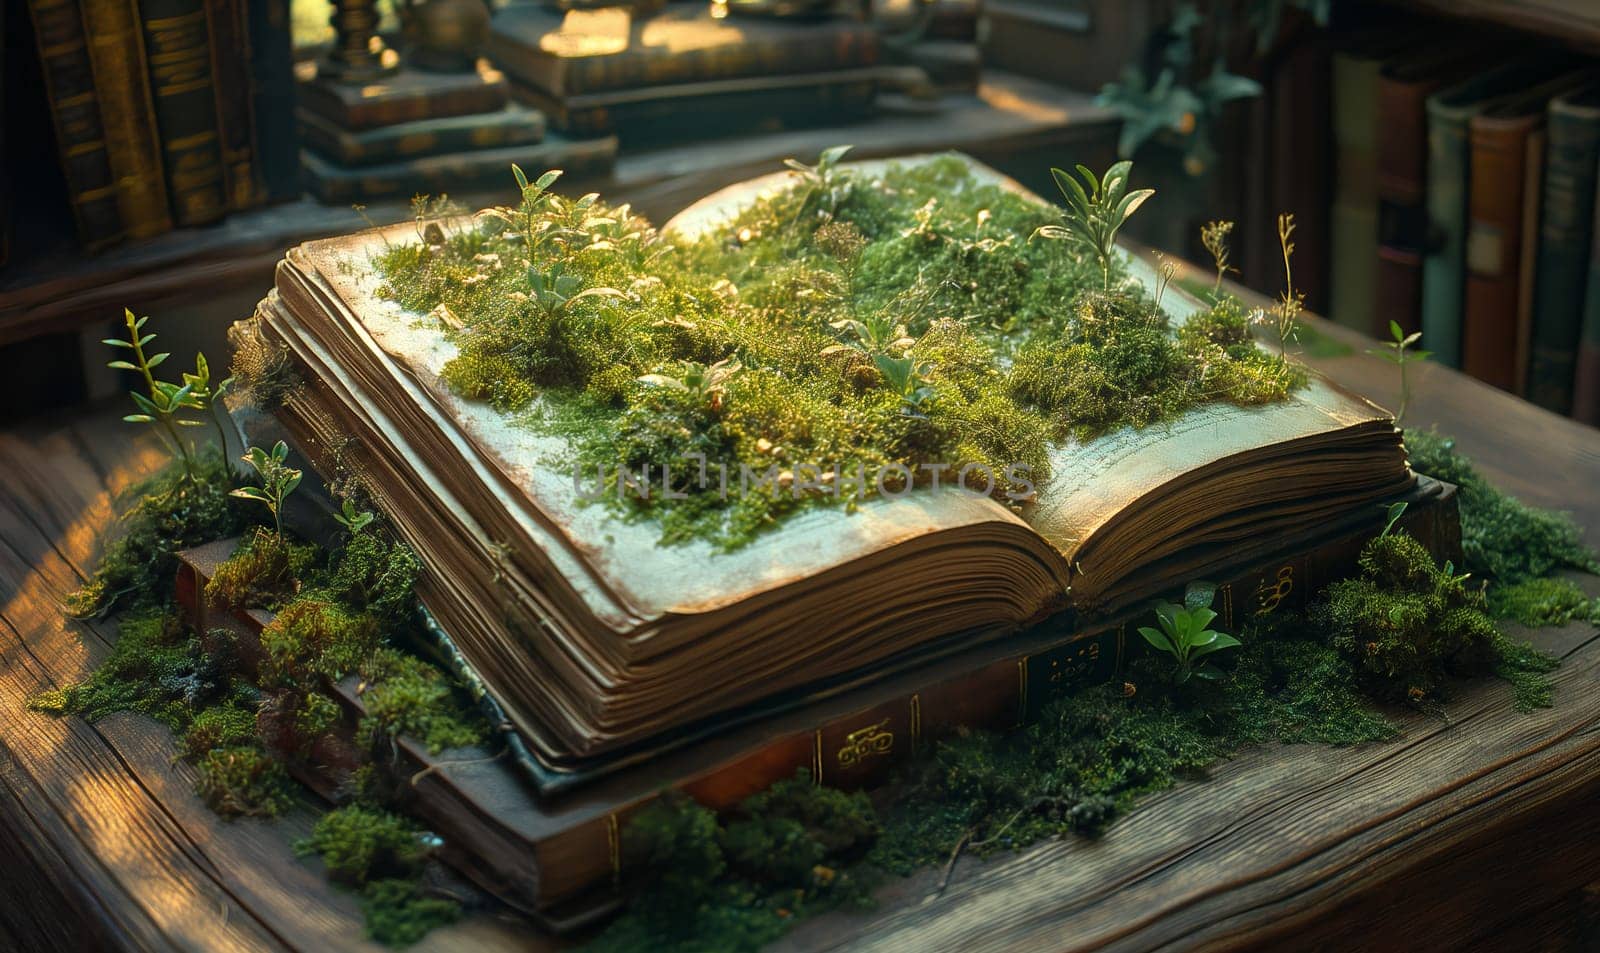 Open Book Overgrown With Moss. by Fischeron